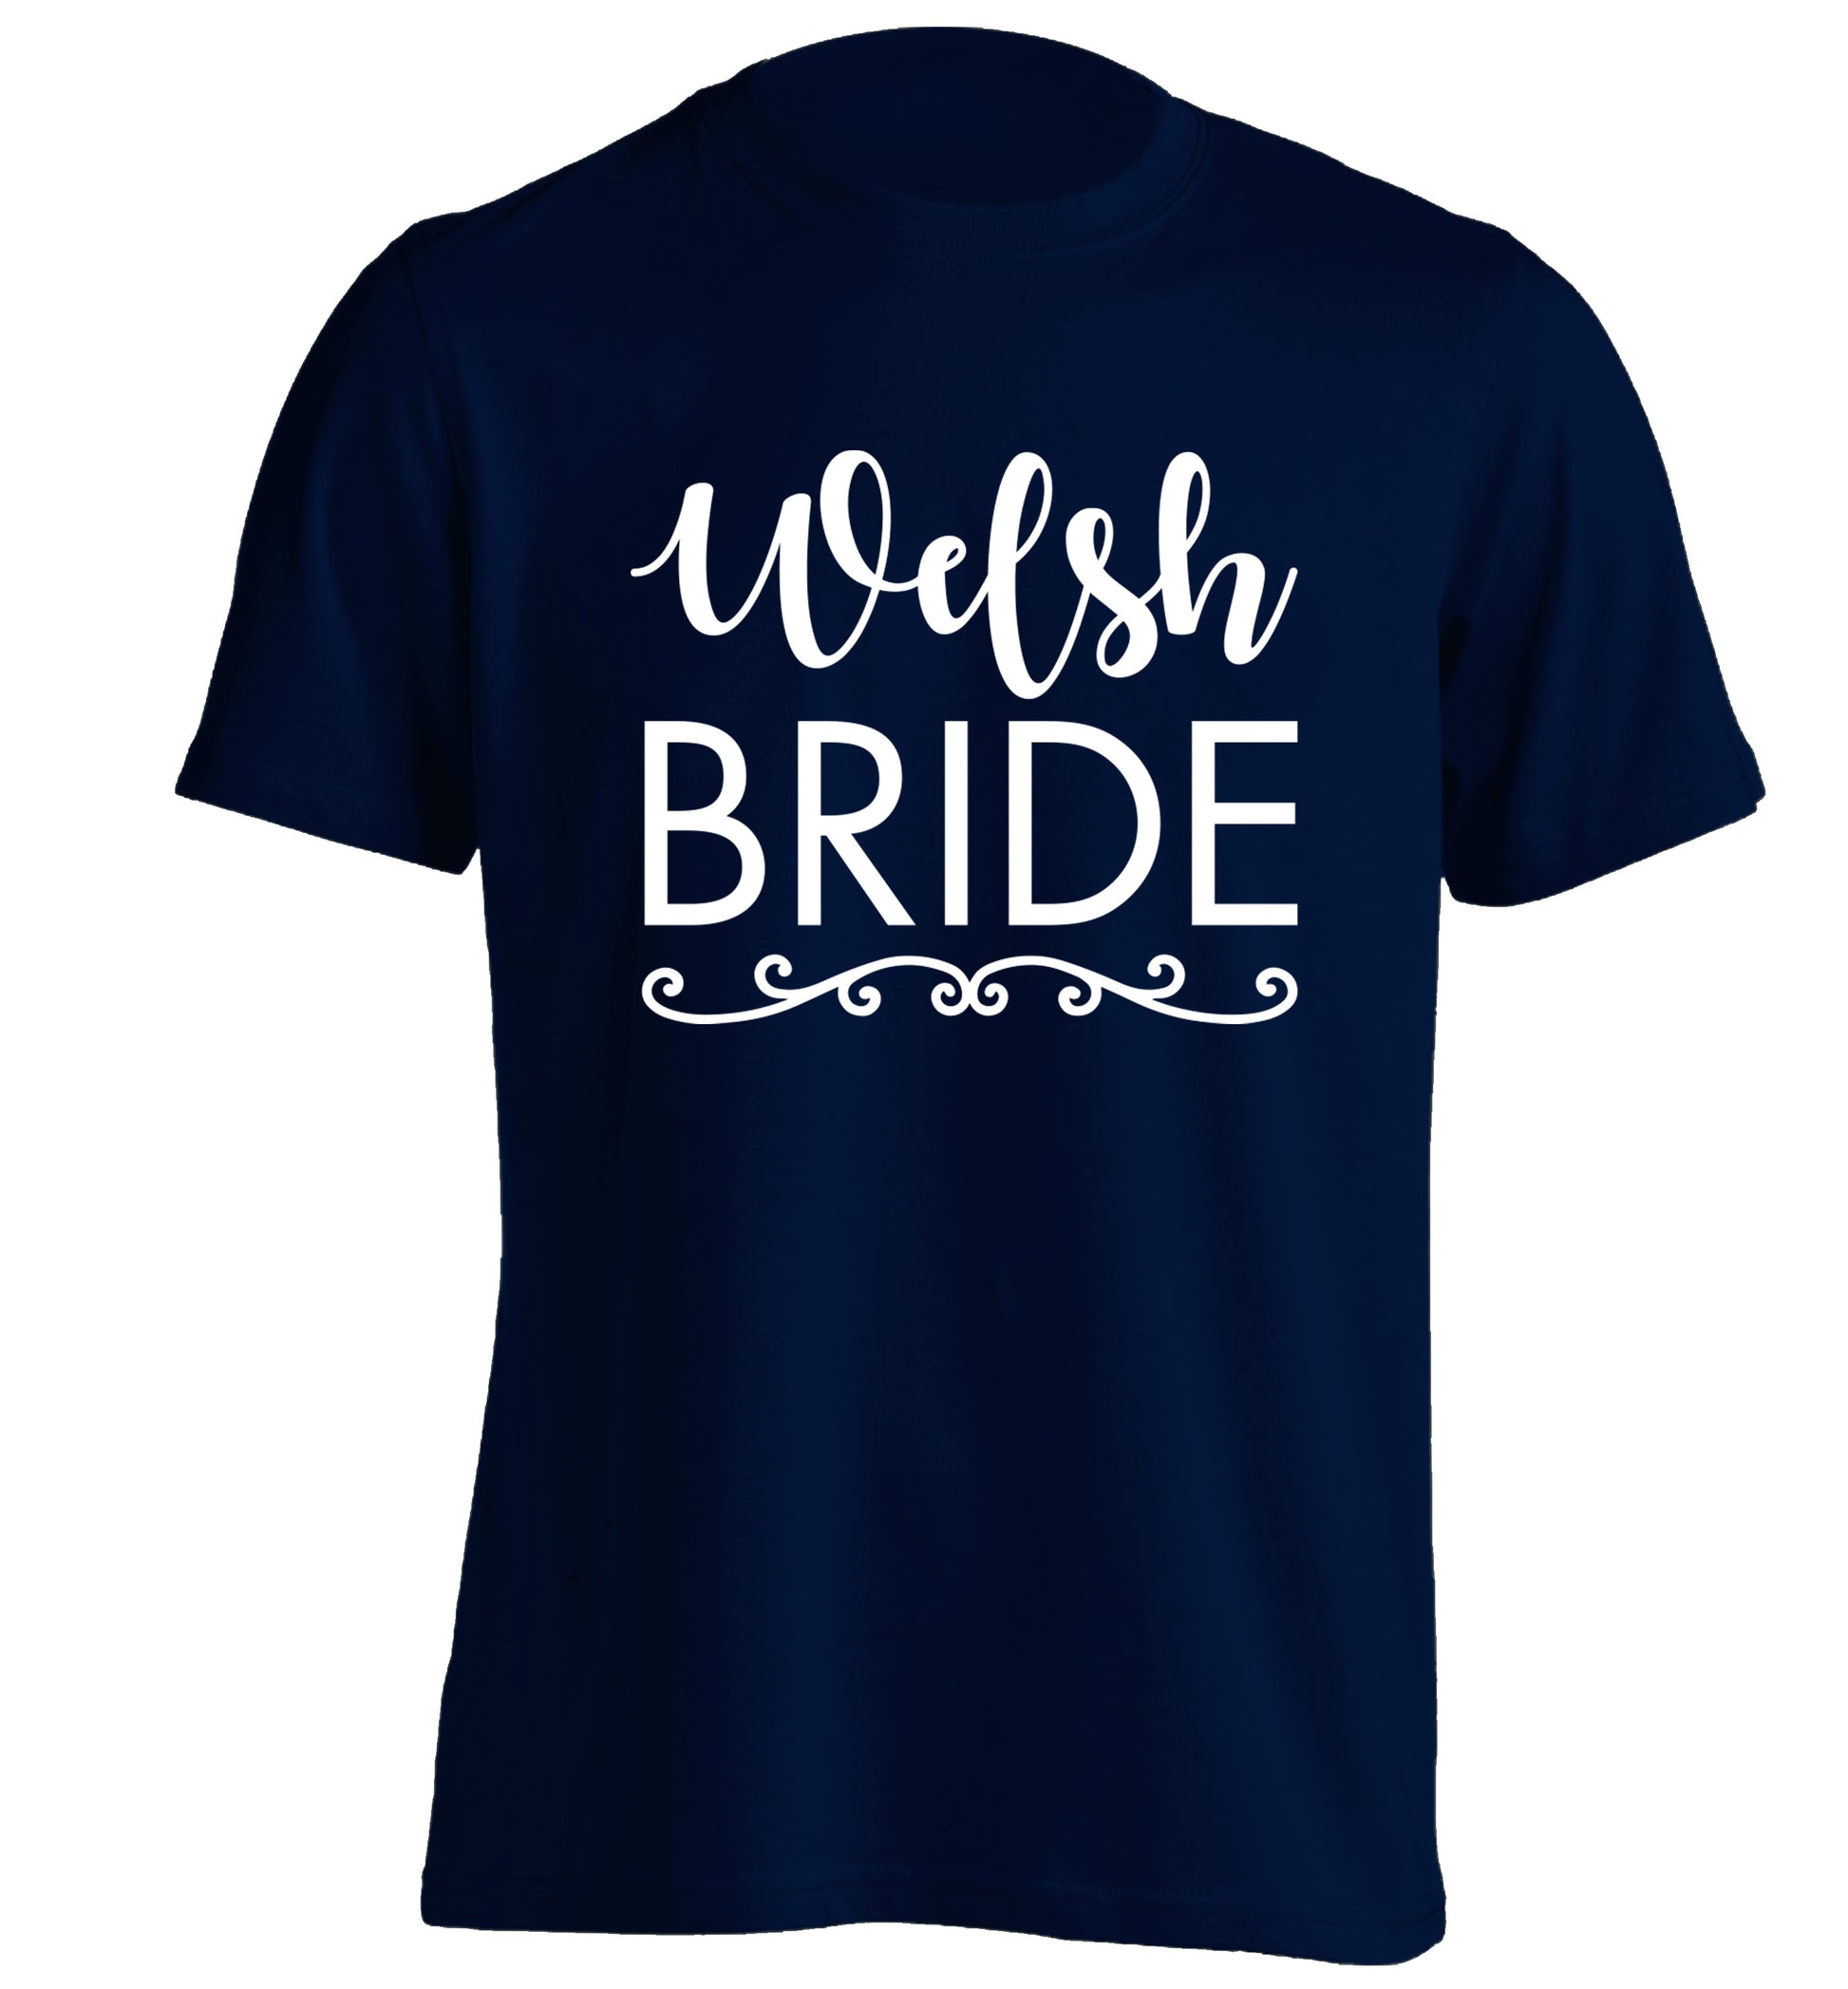 Welsh Bride adults unisex navy Tshirt 2XL